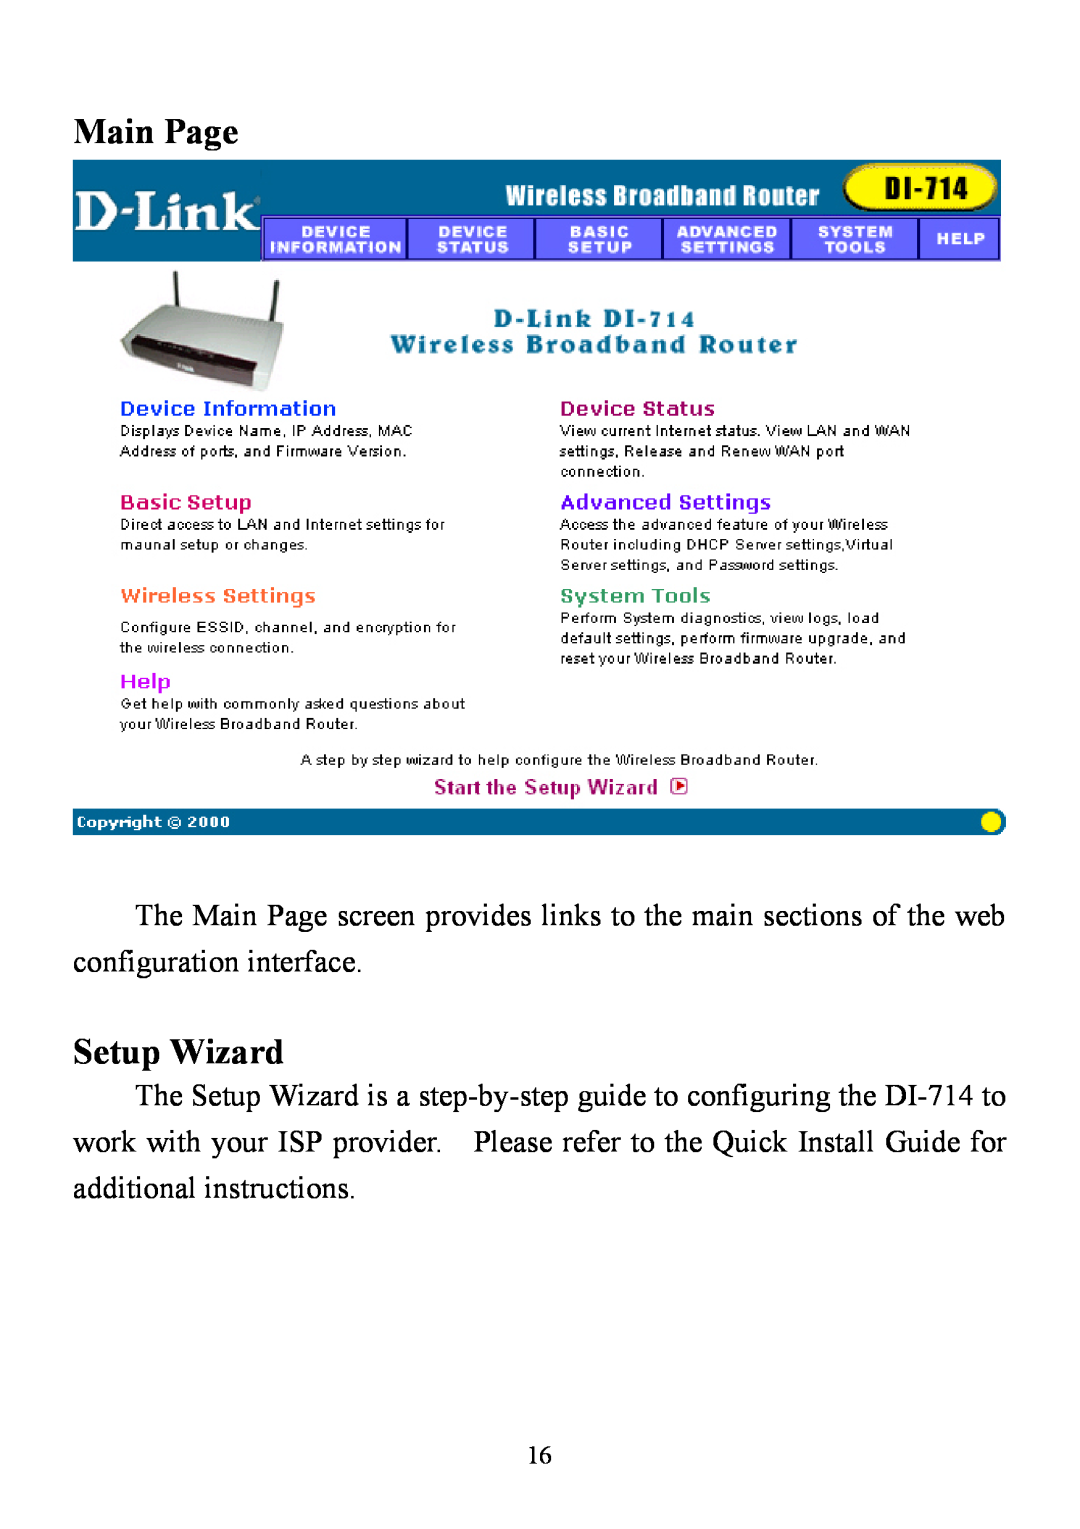 D-Link DI-714 user manual Main Page, Setup Wizard 